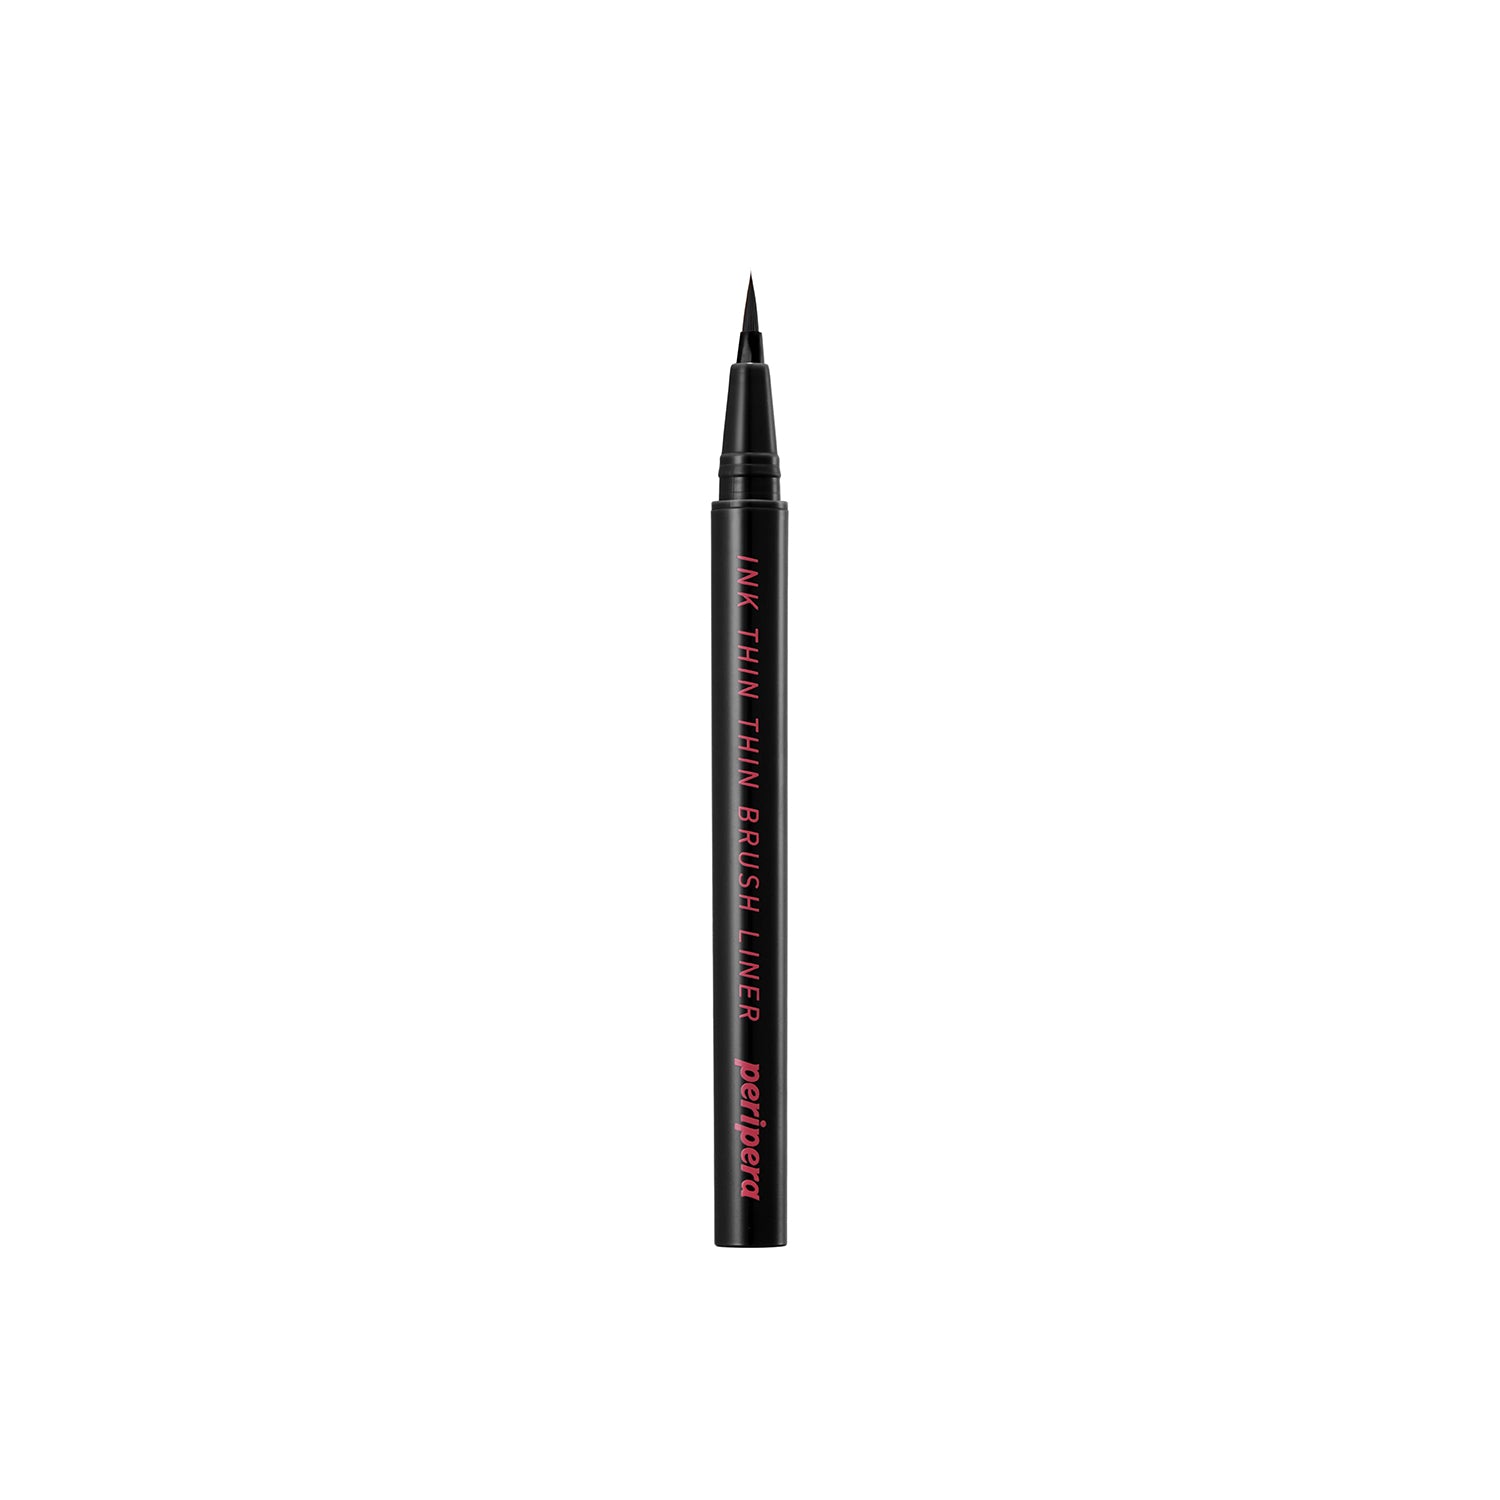 Ink Thin Thin Brush Liner 001 Black Noir